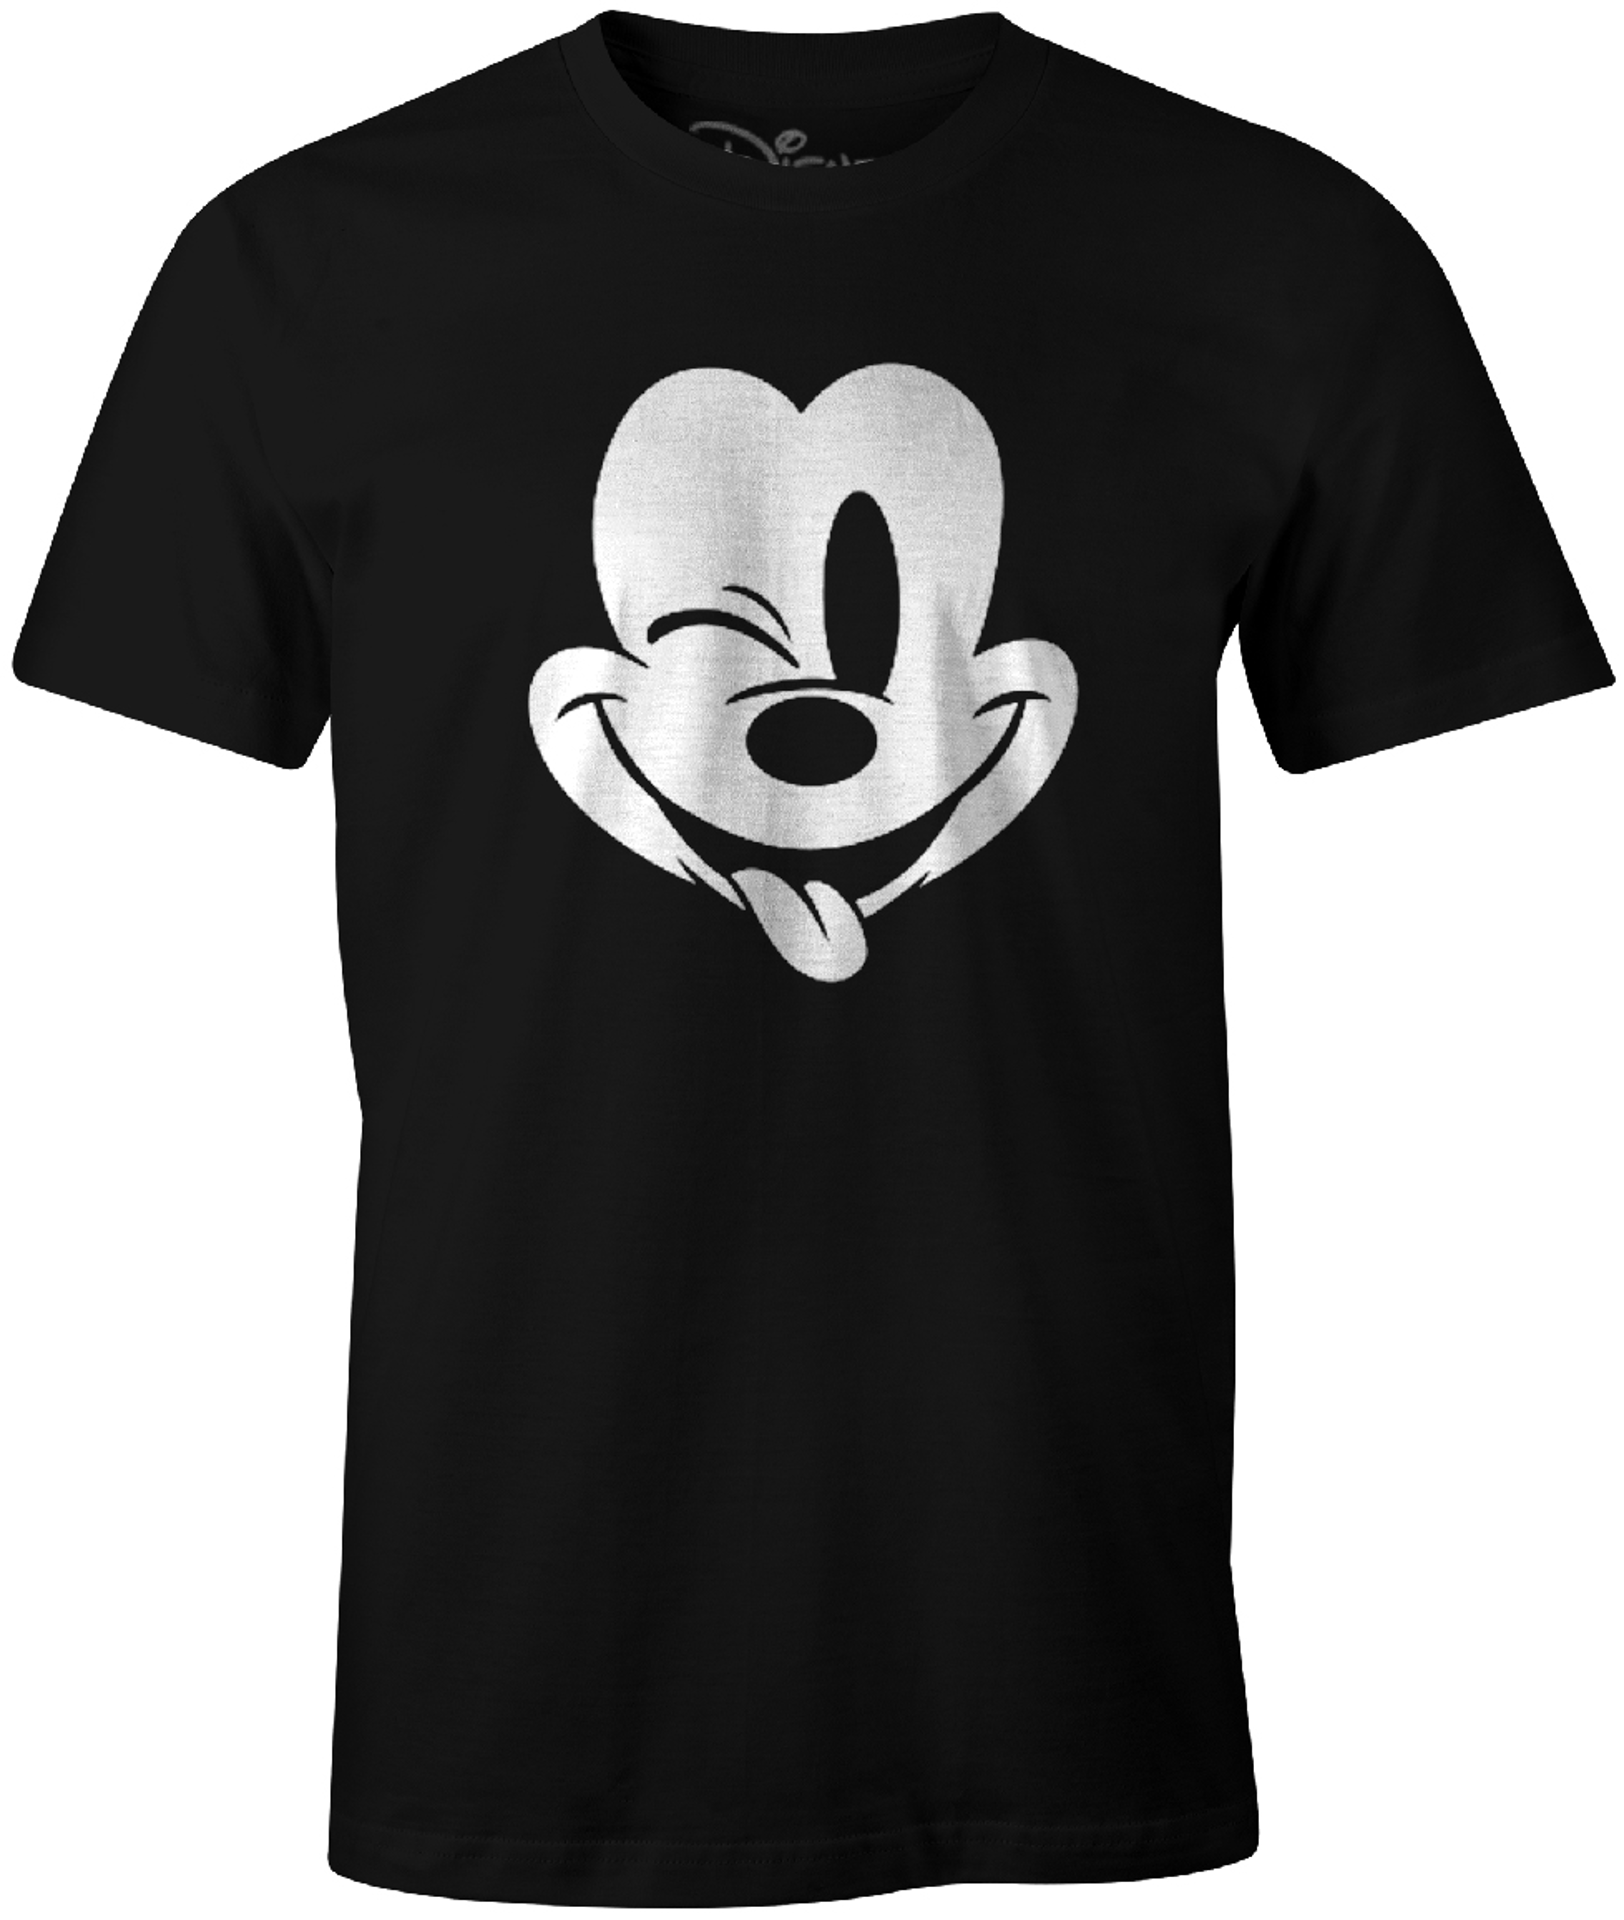 Disney - T-Shirt Noir Mickey Mouse faisant un clin d'oeil - XL